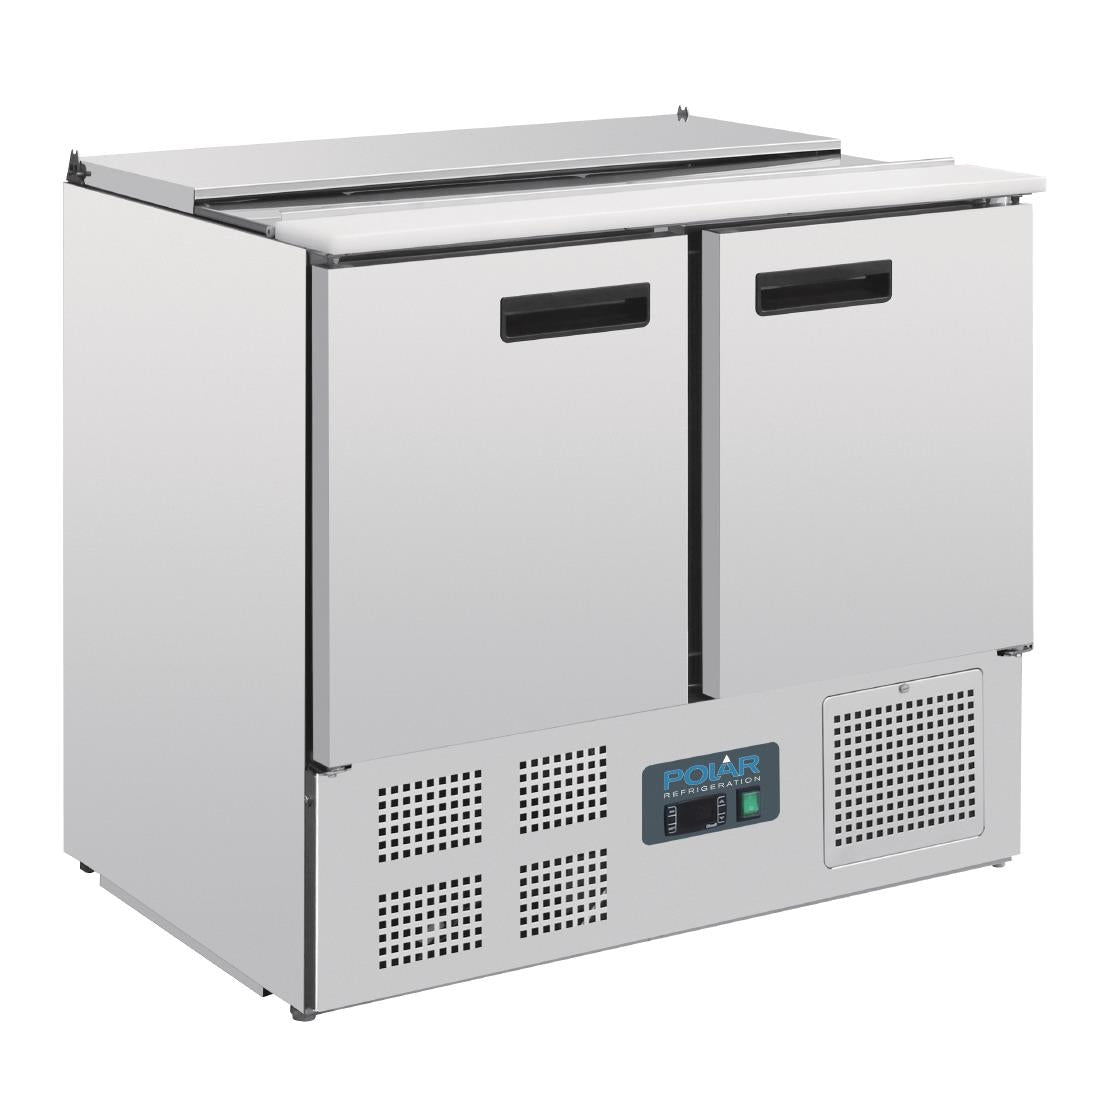 G606 Polar G-Series Saladette Counter Fridge 240Ltr JD Catering Equipment Solutions Ltd